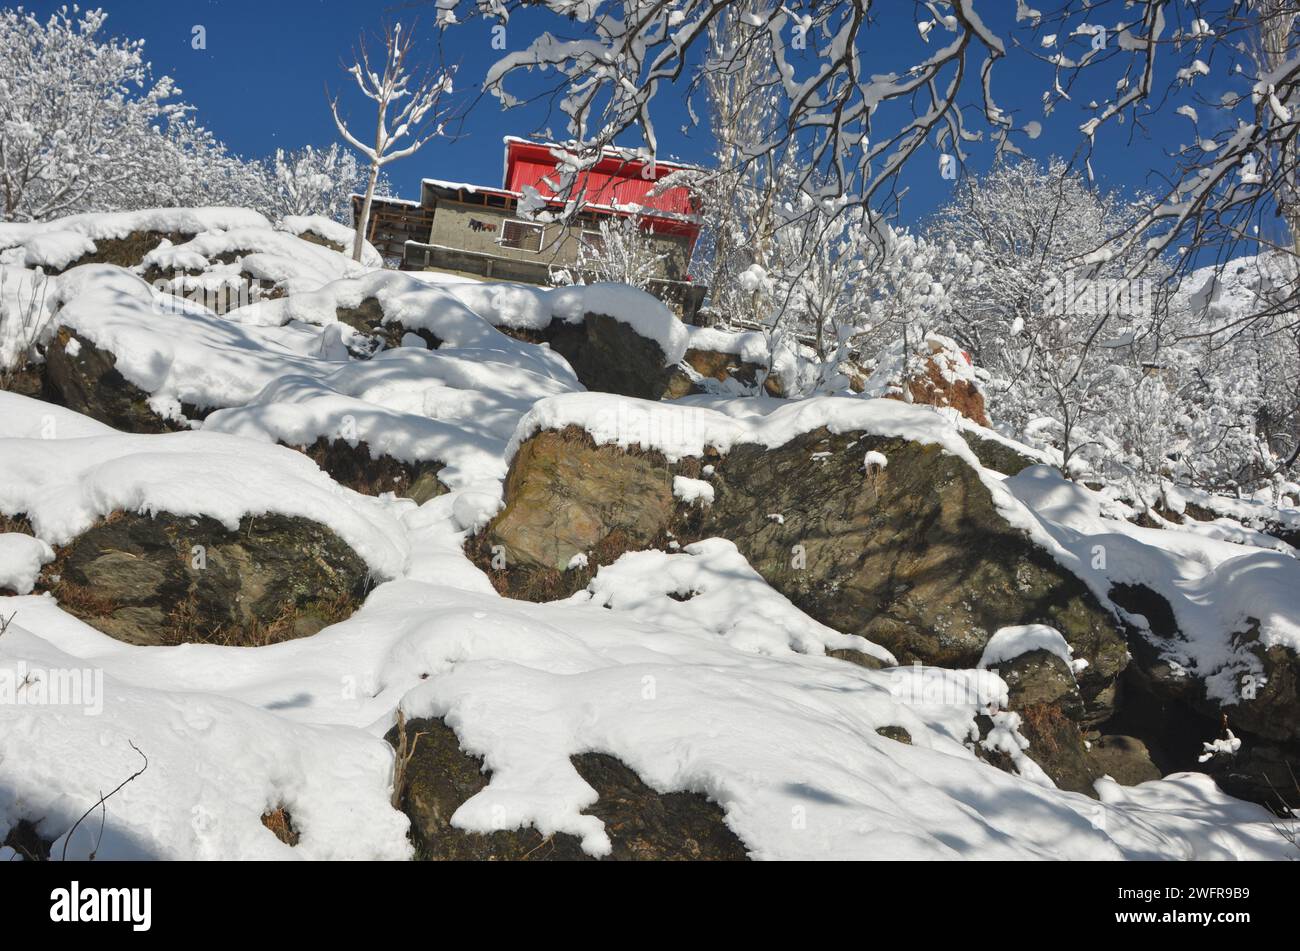 Wintersaison im Tal Kaghan naran, nach starkem Schneefall, Schneefall Bilder Stockfoto